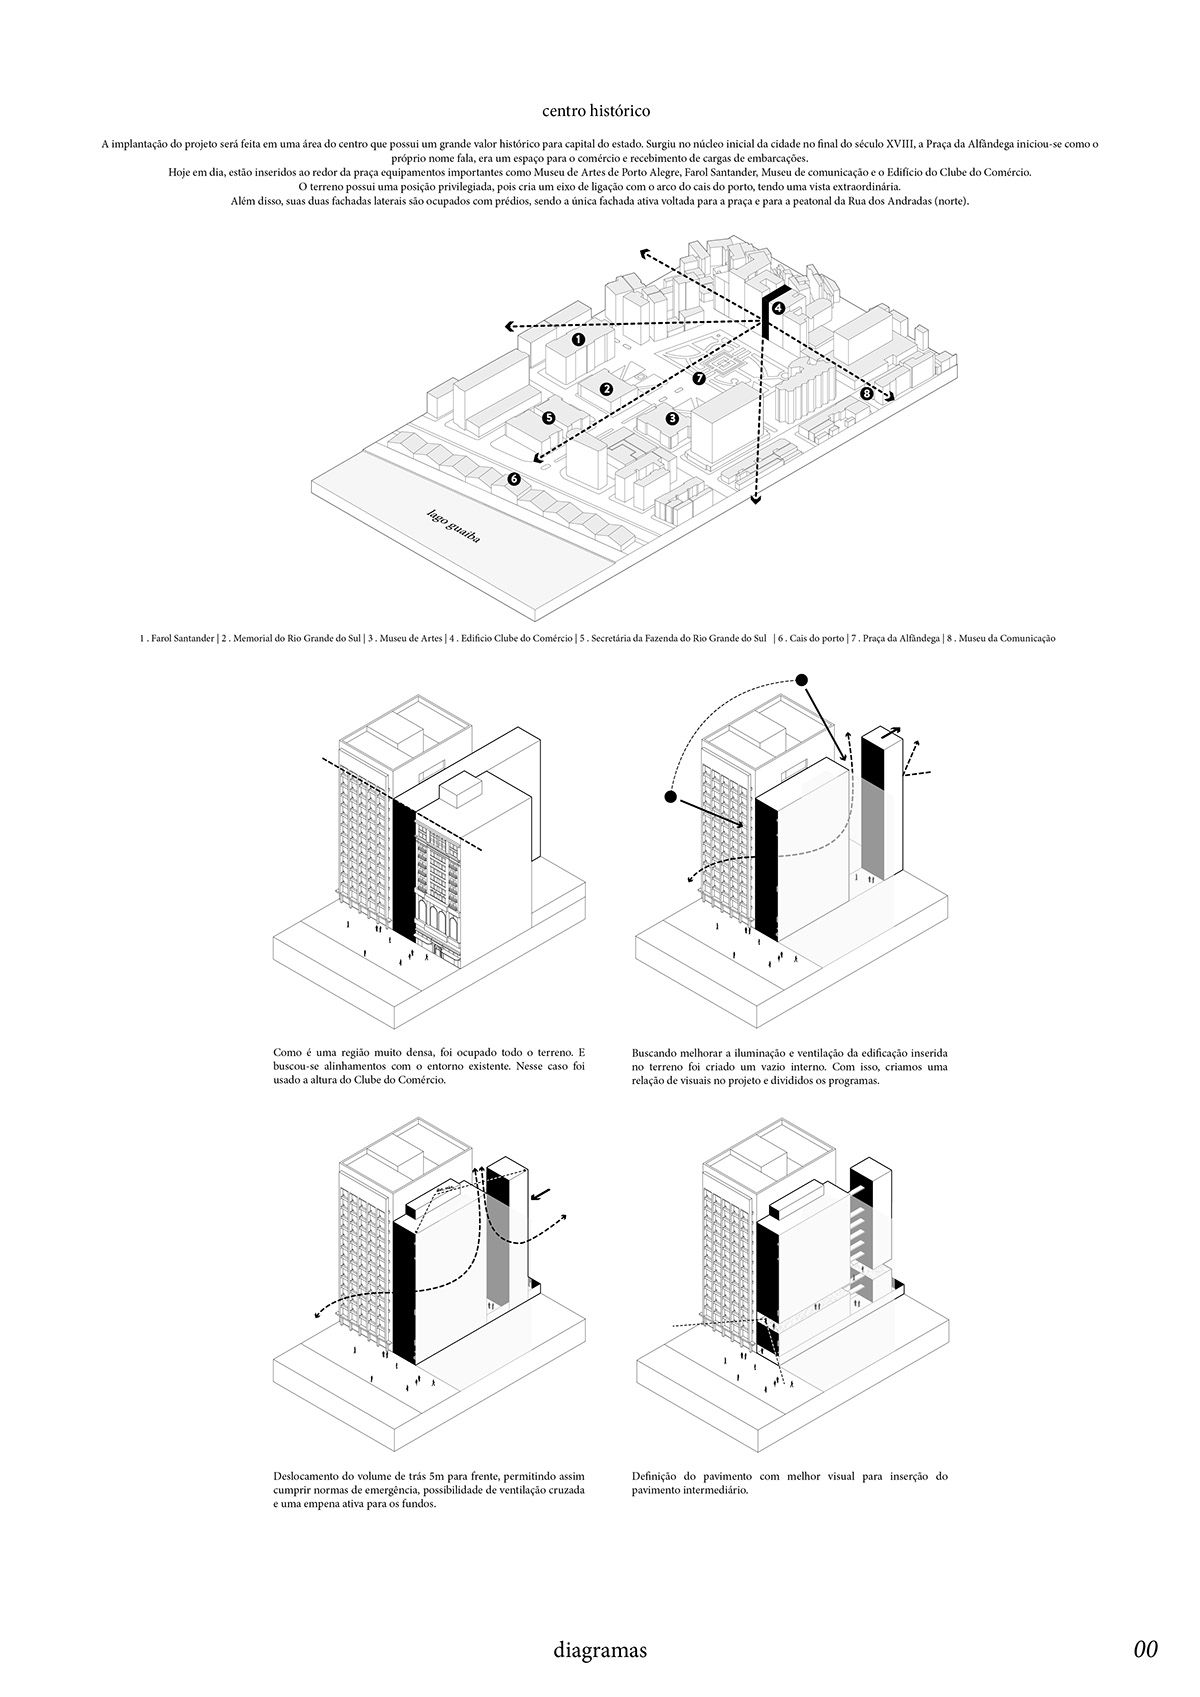 Diagrama Illustrator porto alegre TCC uniritter architecture ARQUITETURA Isometric tfg visualization